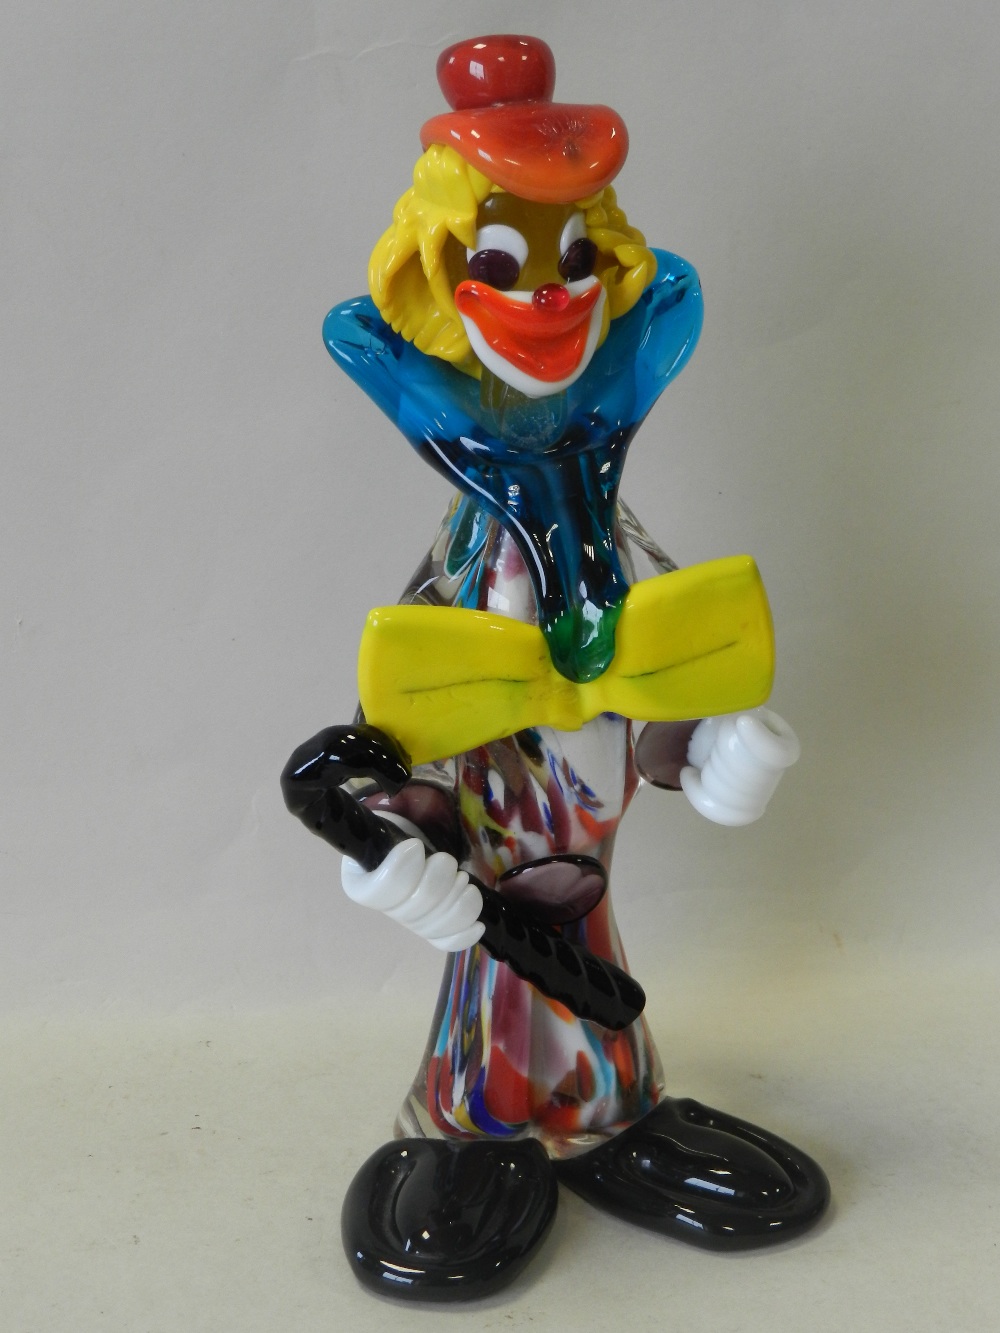 A mid 20th century Venetian glass figure of a clown